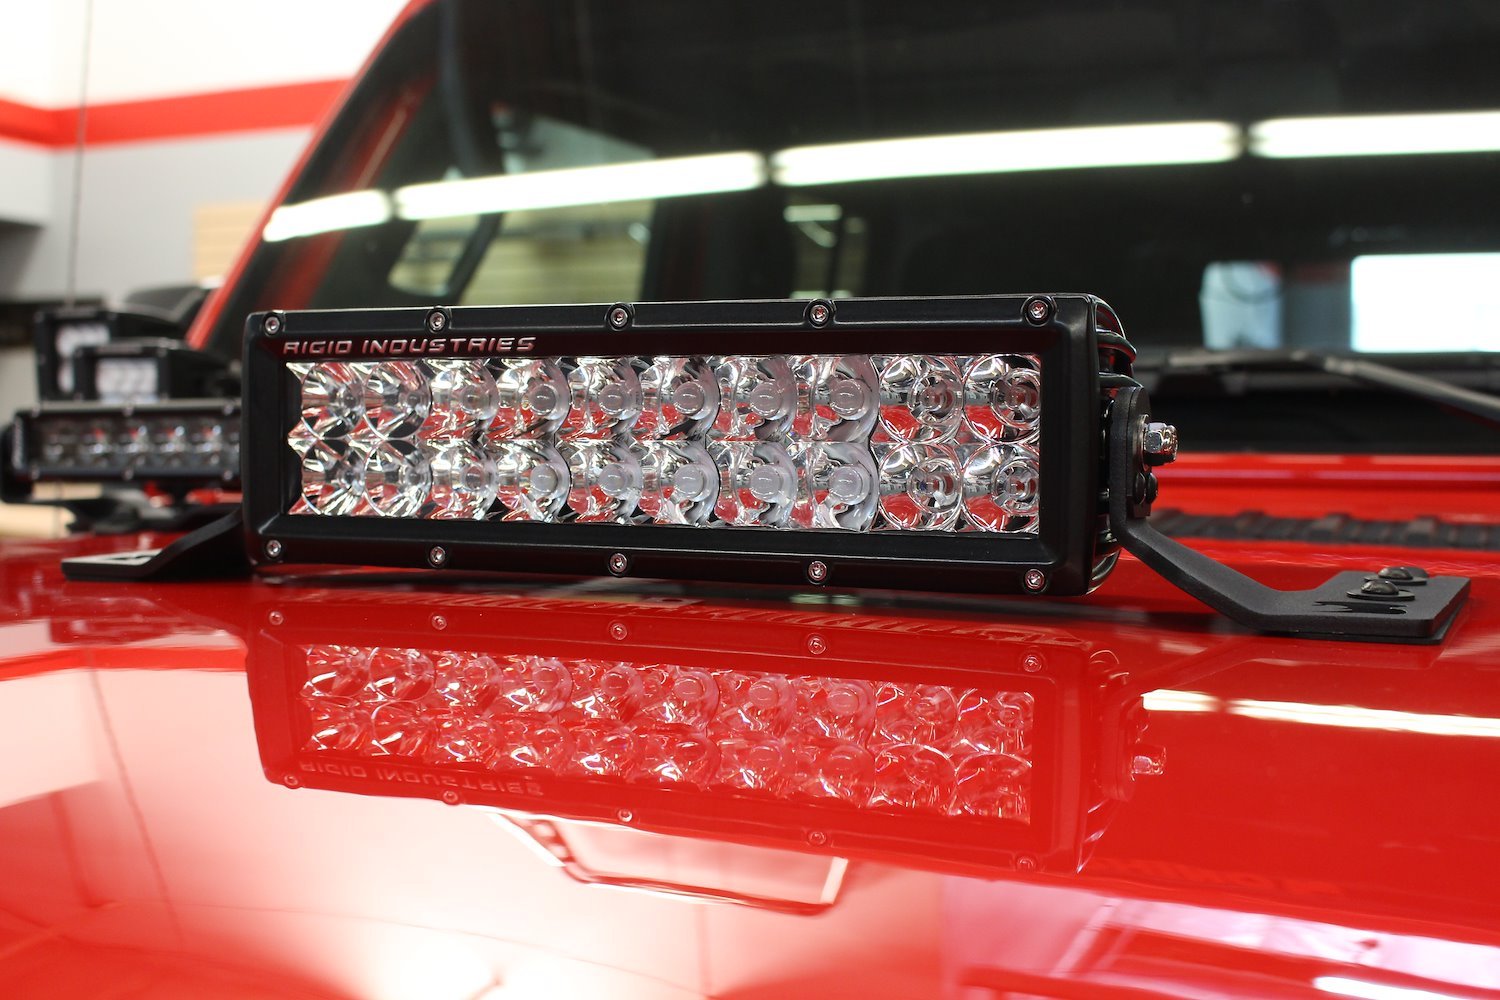 Center Hood Mounted Light Brackets for 10 In. LED Light Bar Brackets fits 2018 Jeep Wrangler JL